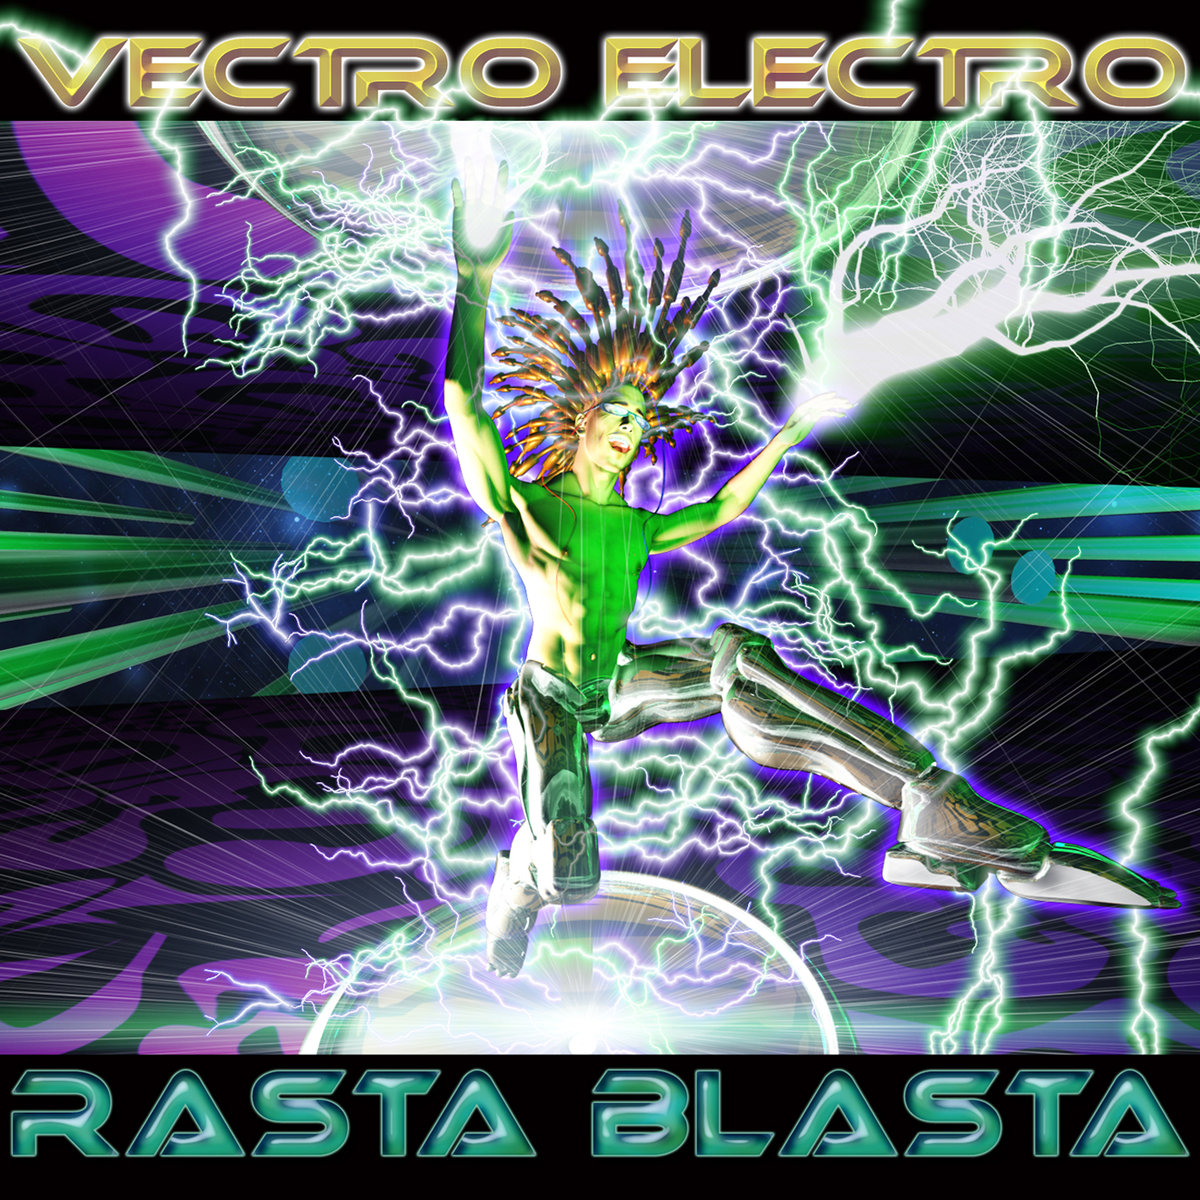 Vectro Electro feat. Orca - Jagger Meister @ 'Rasta Blasta' album (electronic, goa)